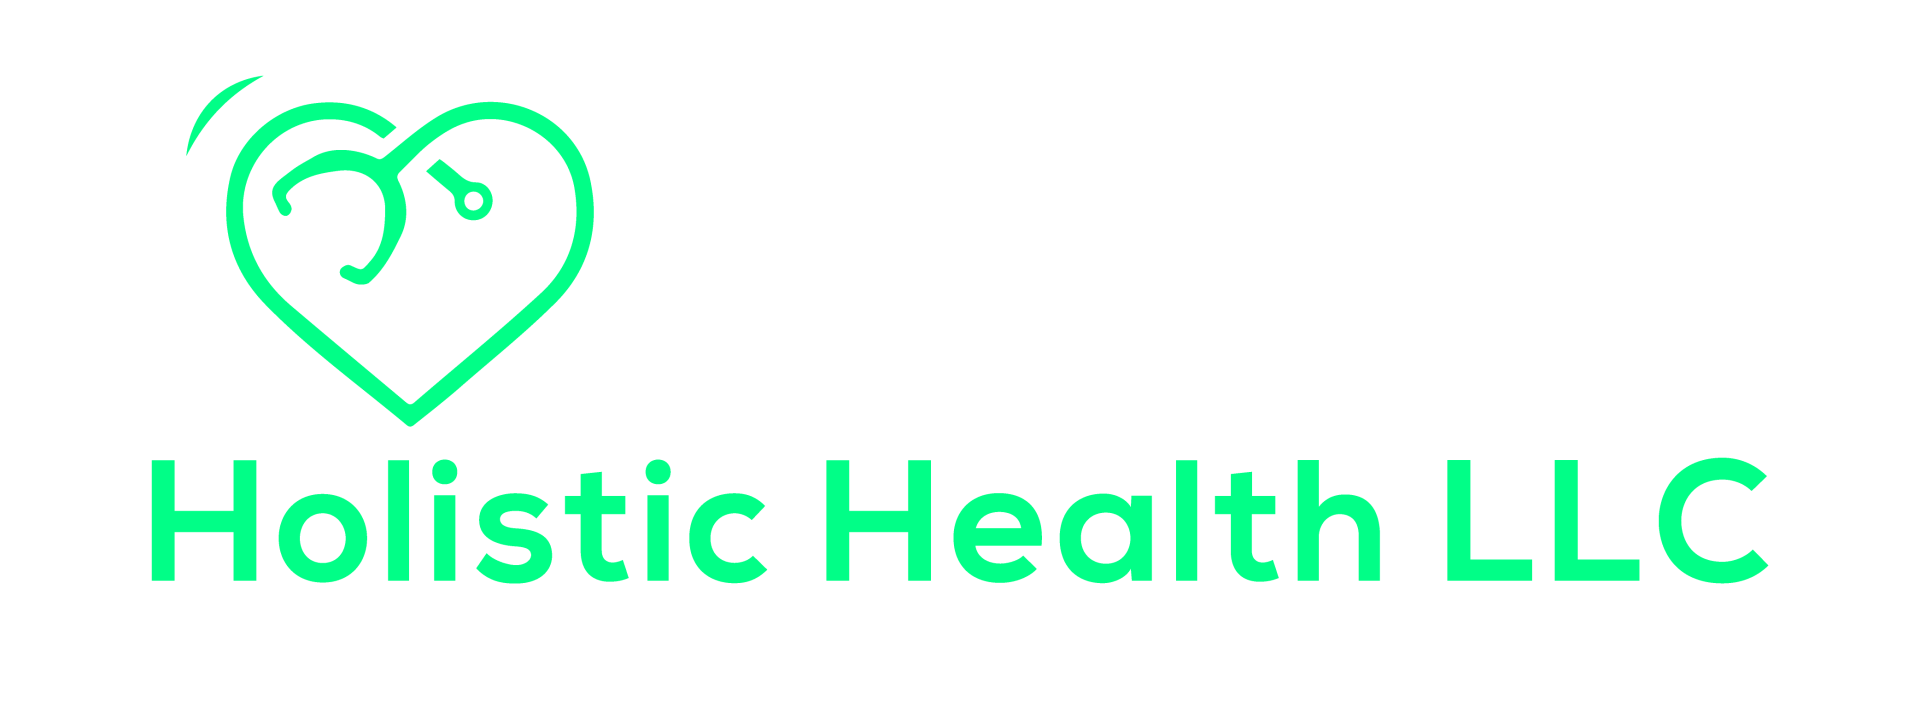 the logo for VEMa holistic health llc has a green heart on it .